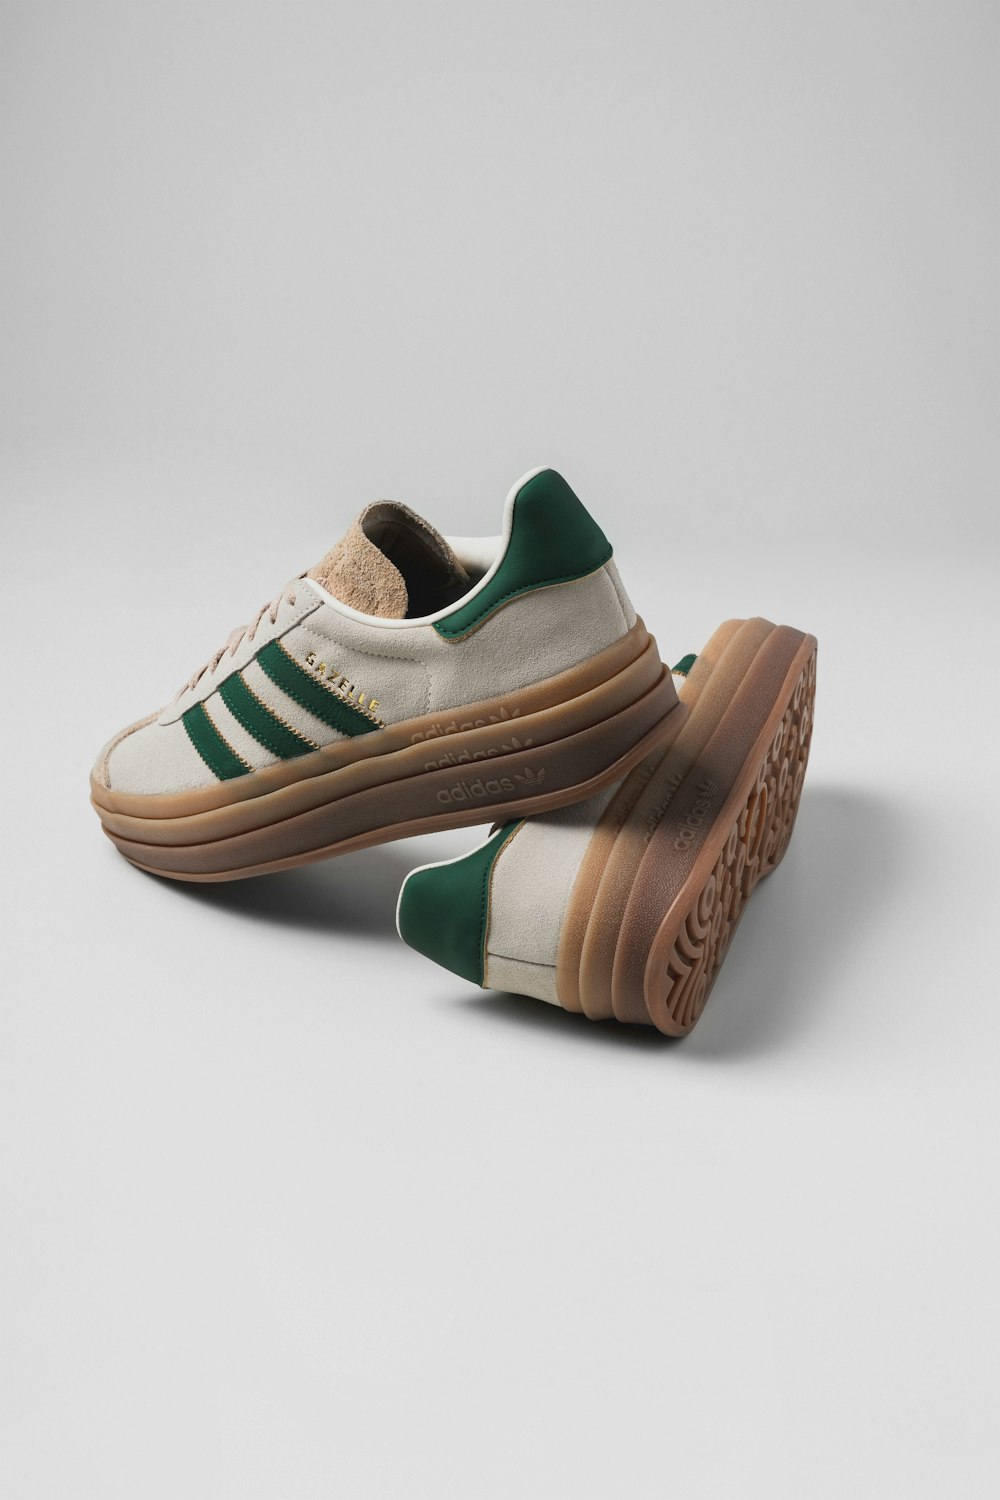 un paio di scarpe da tennis bianche e verdi